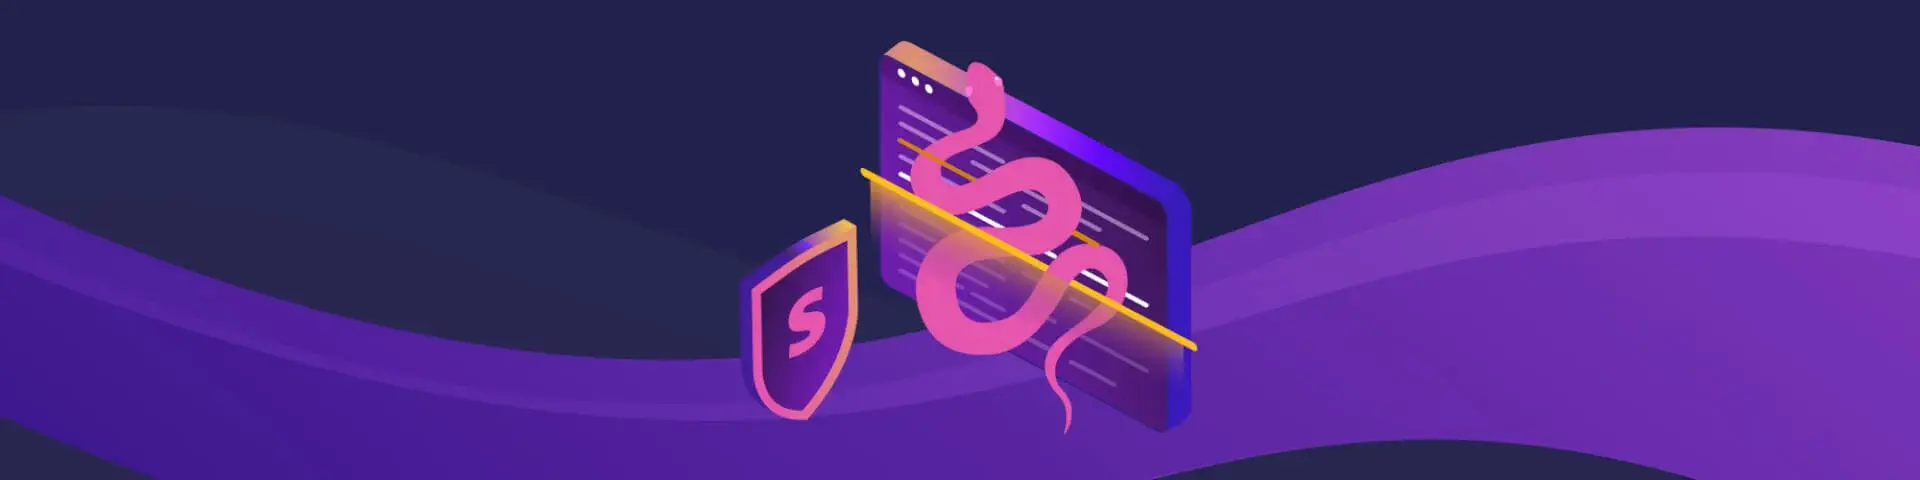 blog-hero-snyk-python-security